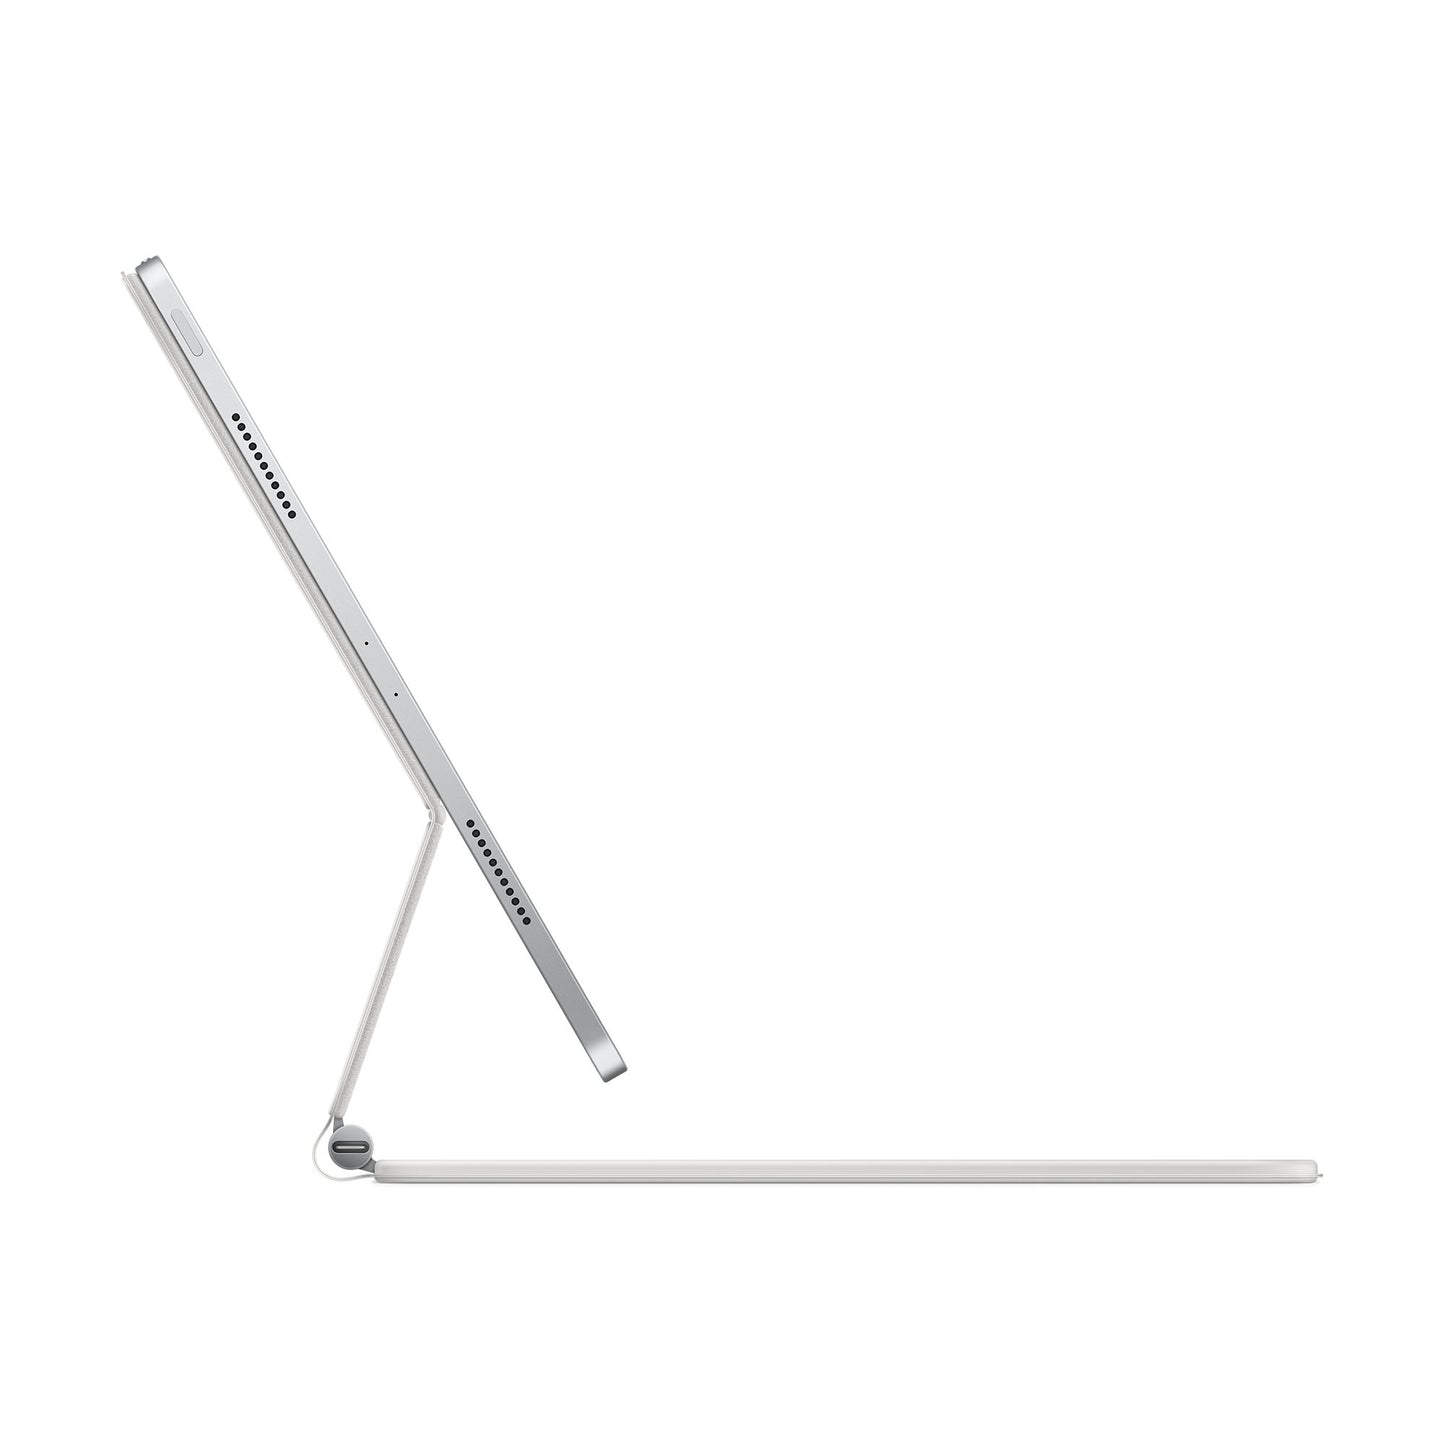 Magic Keyboard for iPad Pro 12.9_inch (5thæGeneration) - USæEnglish - White